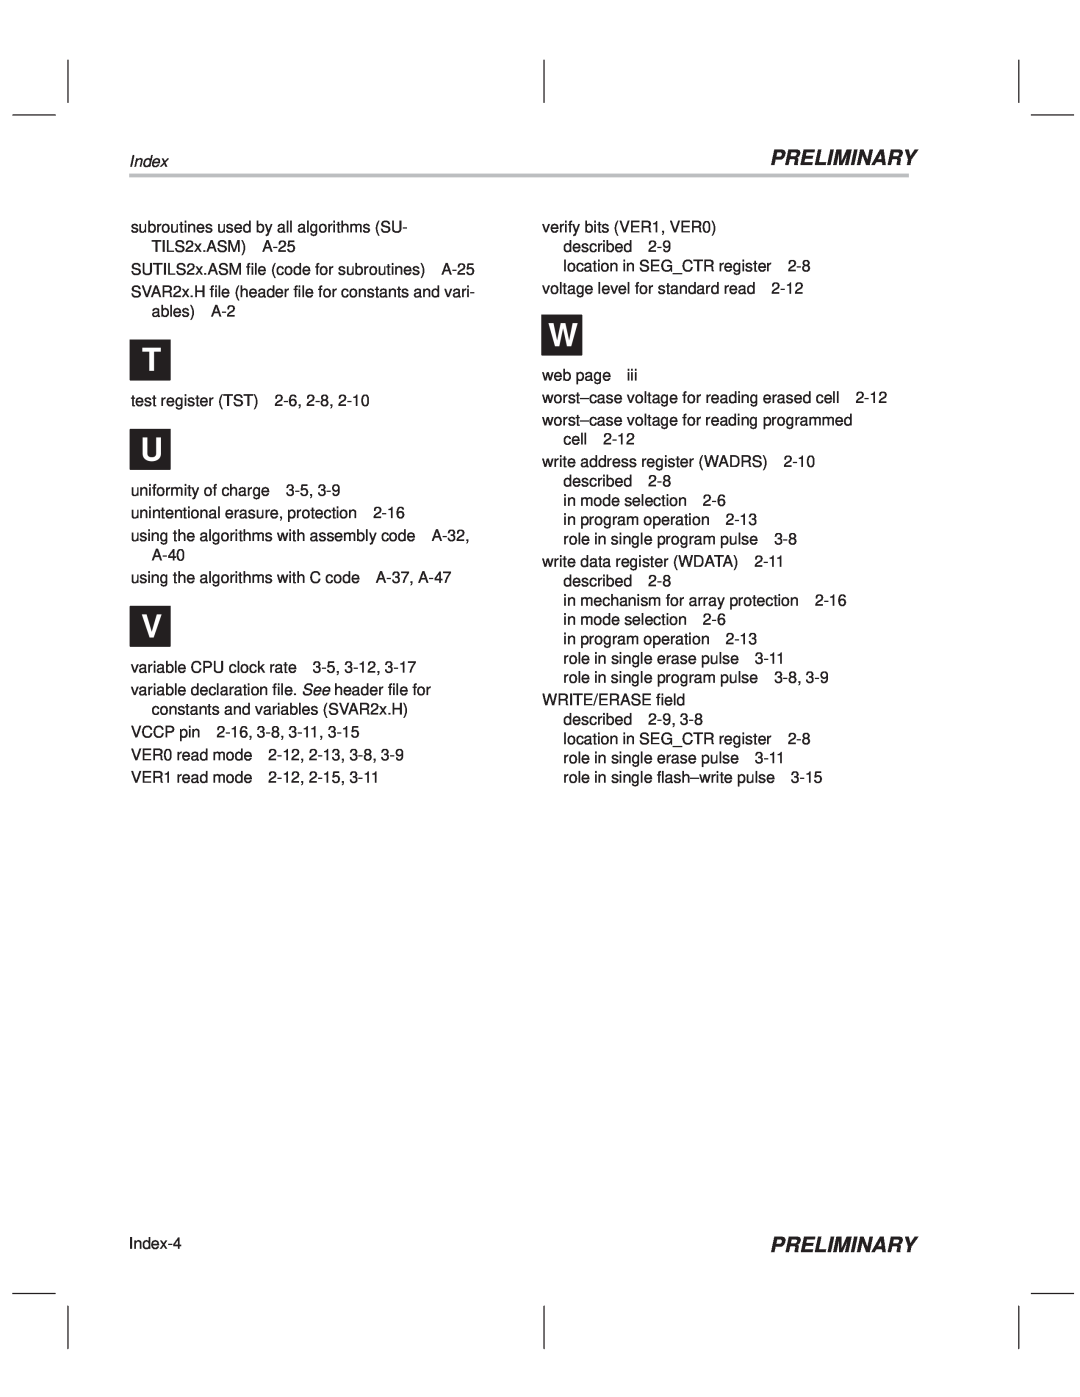 Texas Instruments TMS320F20x/F24x DSP manual Preliminary, Index 